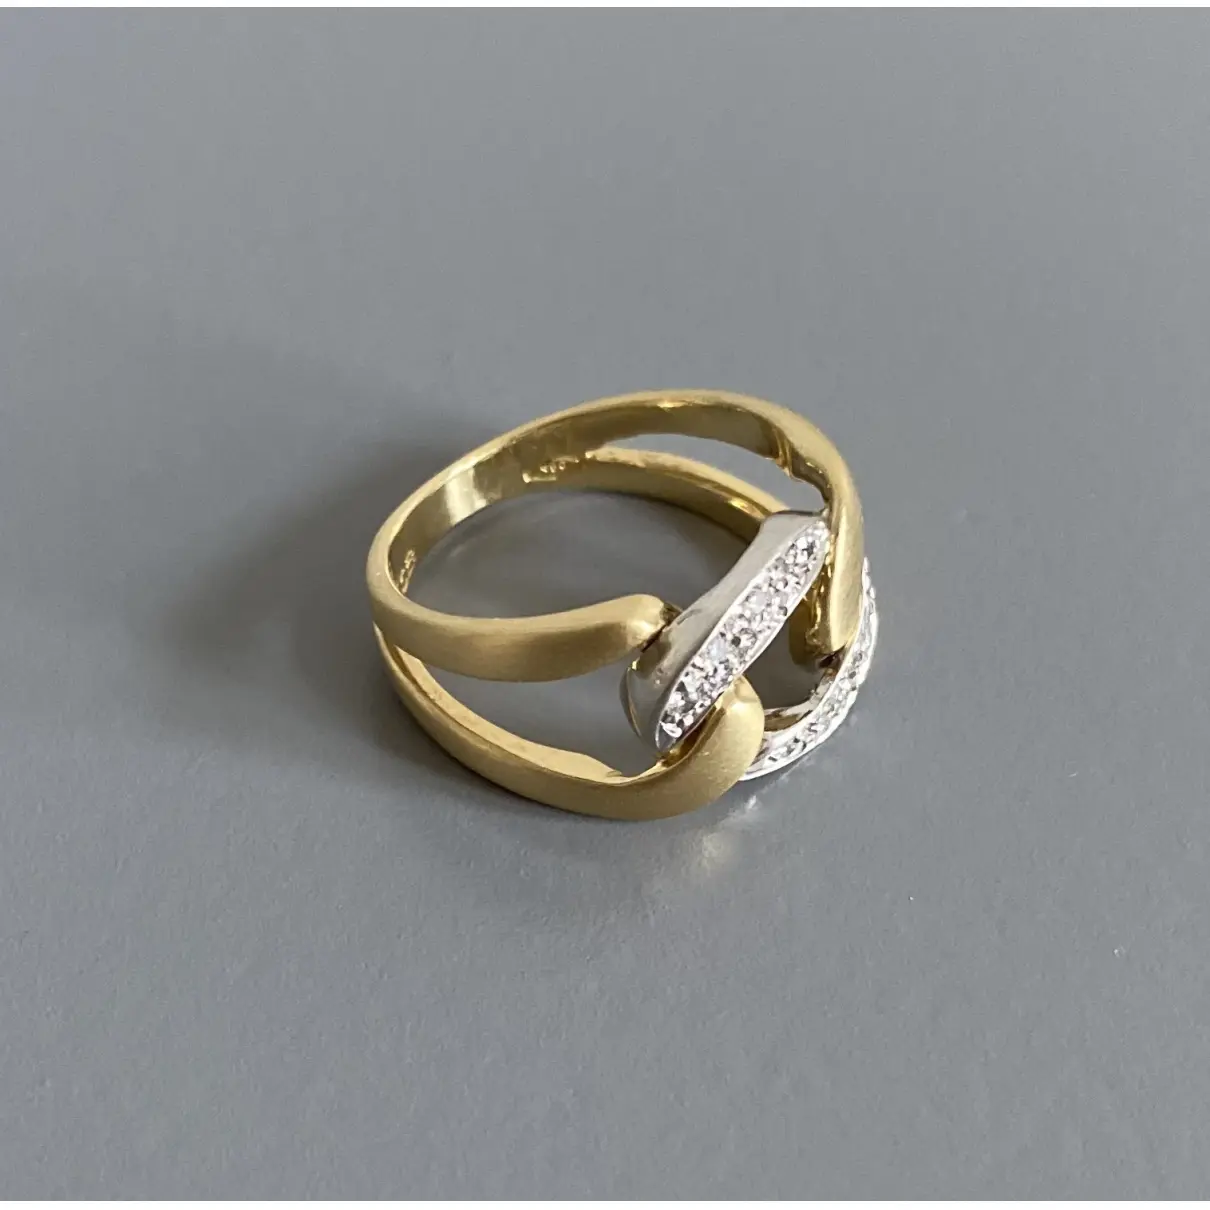 Buy Carl F. Bucherer Yellow gold ring online